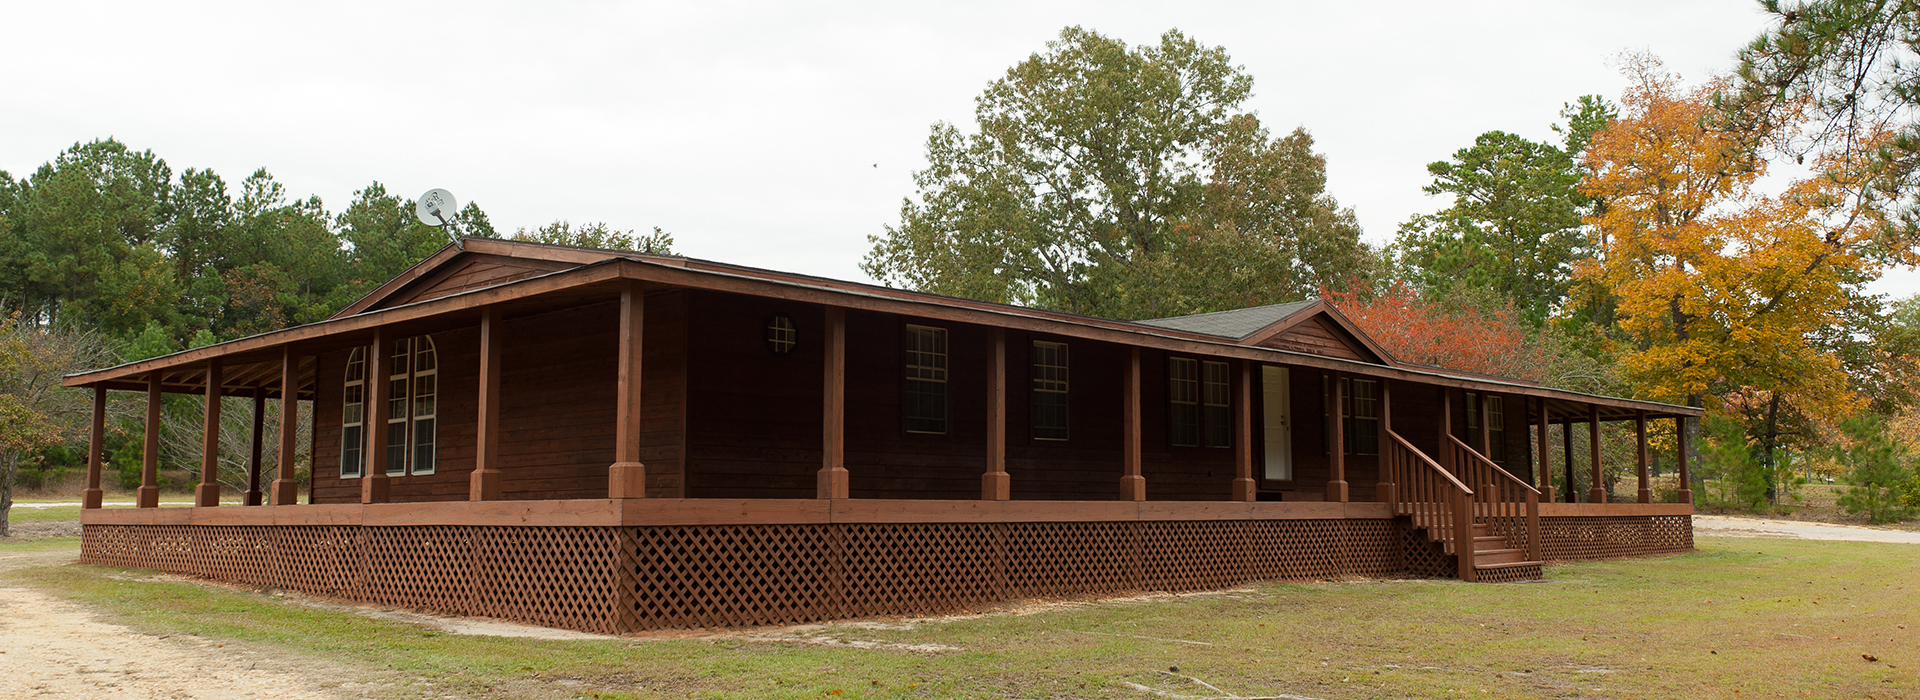 The Preserve Lodge at Moree's Preserve